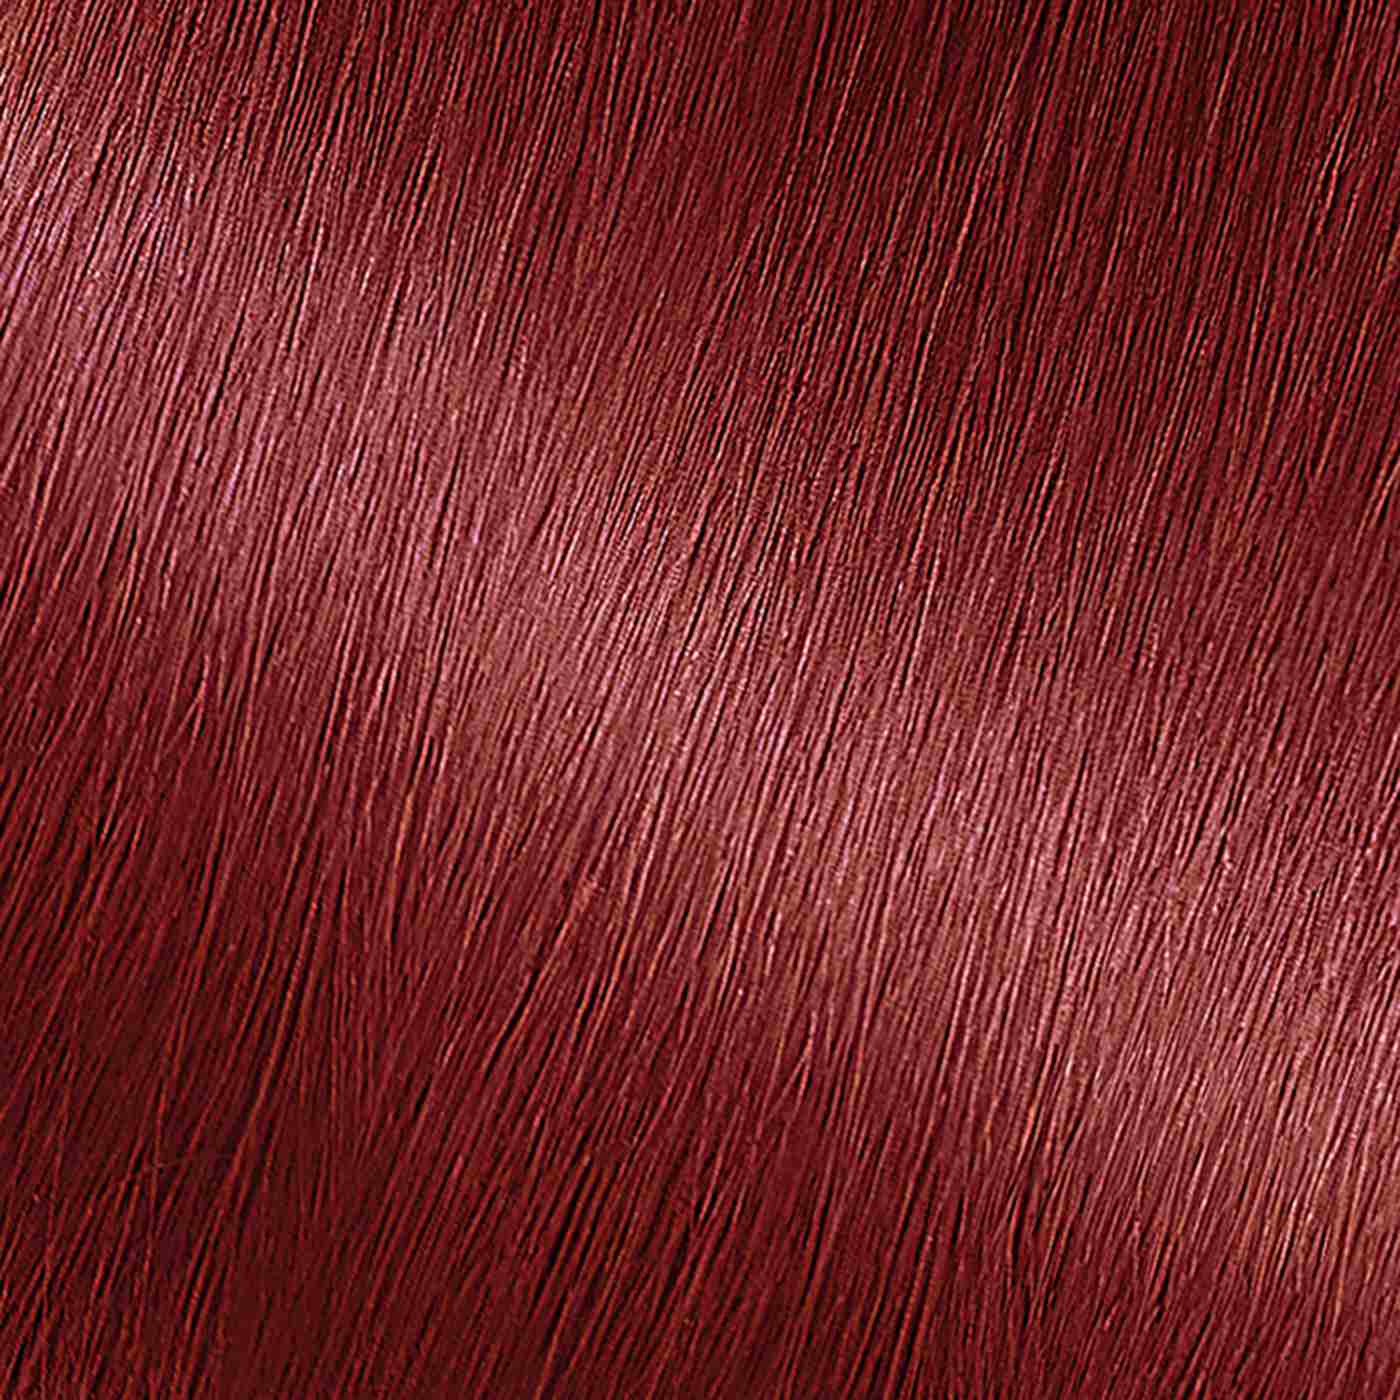 Garnier Nutrisse Nourishing Hair Color Crème - 66 True Red (Pomegranate); image 9 of 11